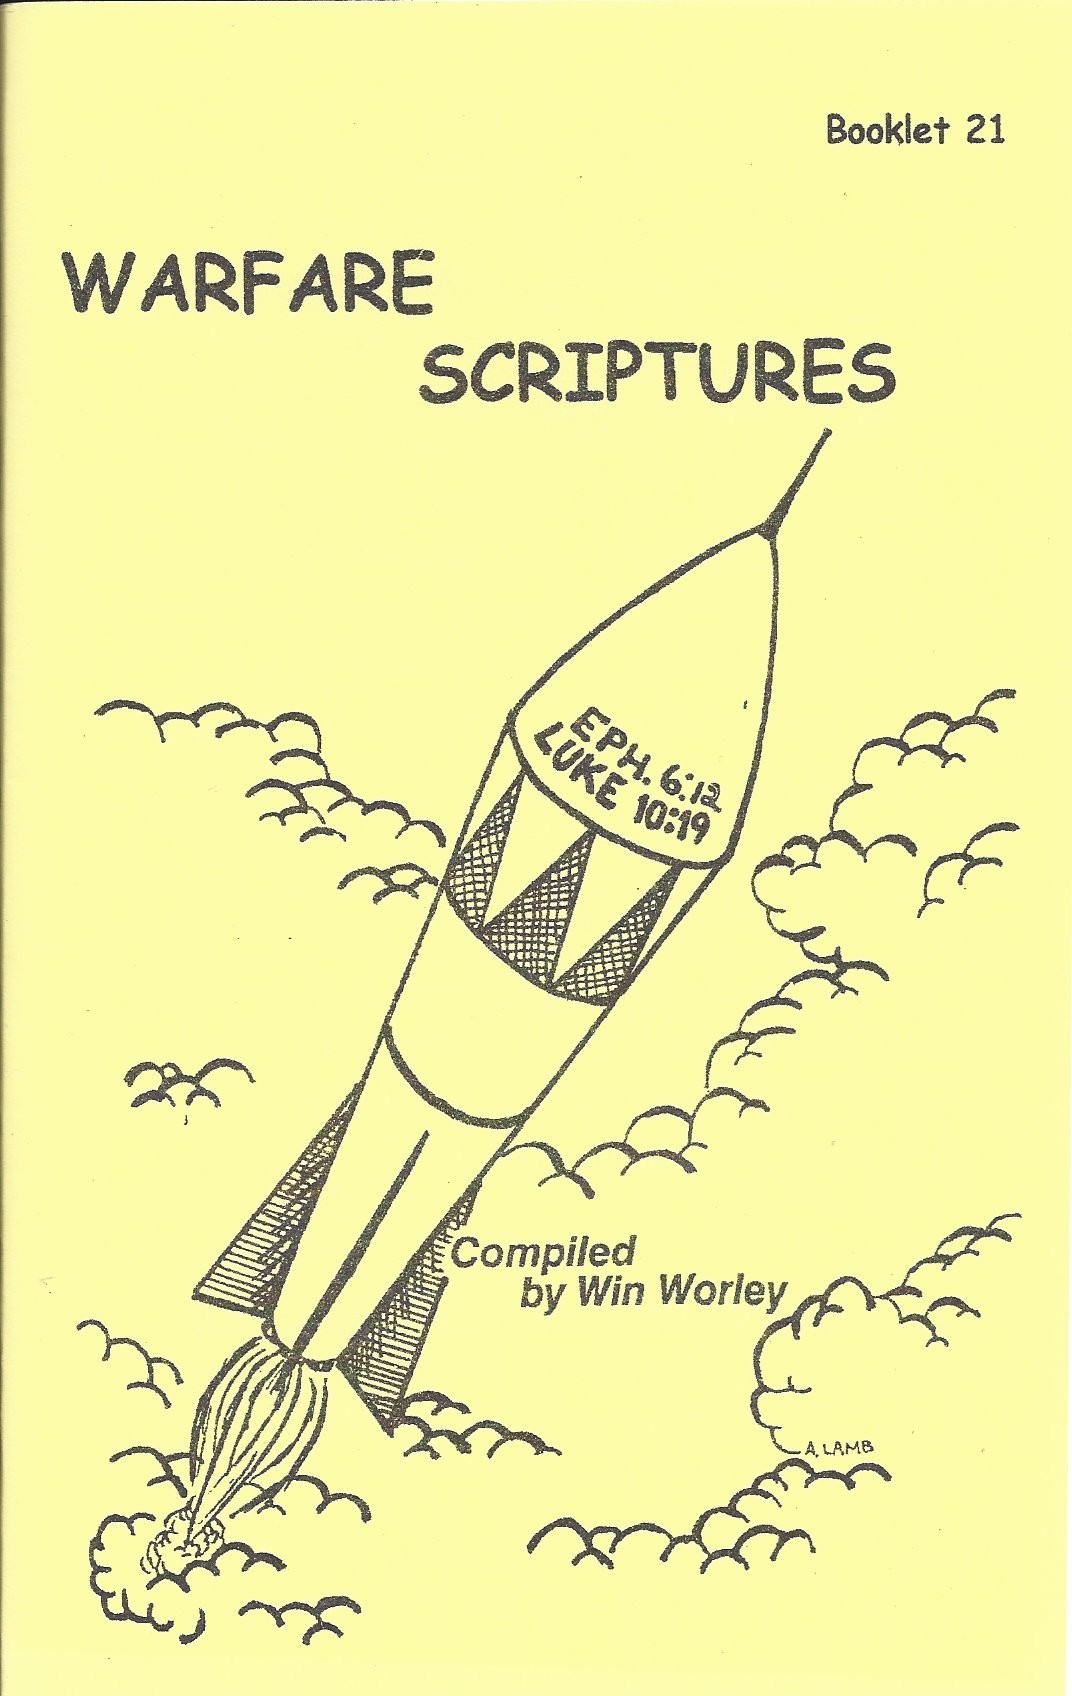 Warfare Scriptures